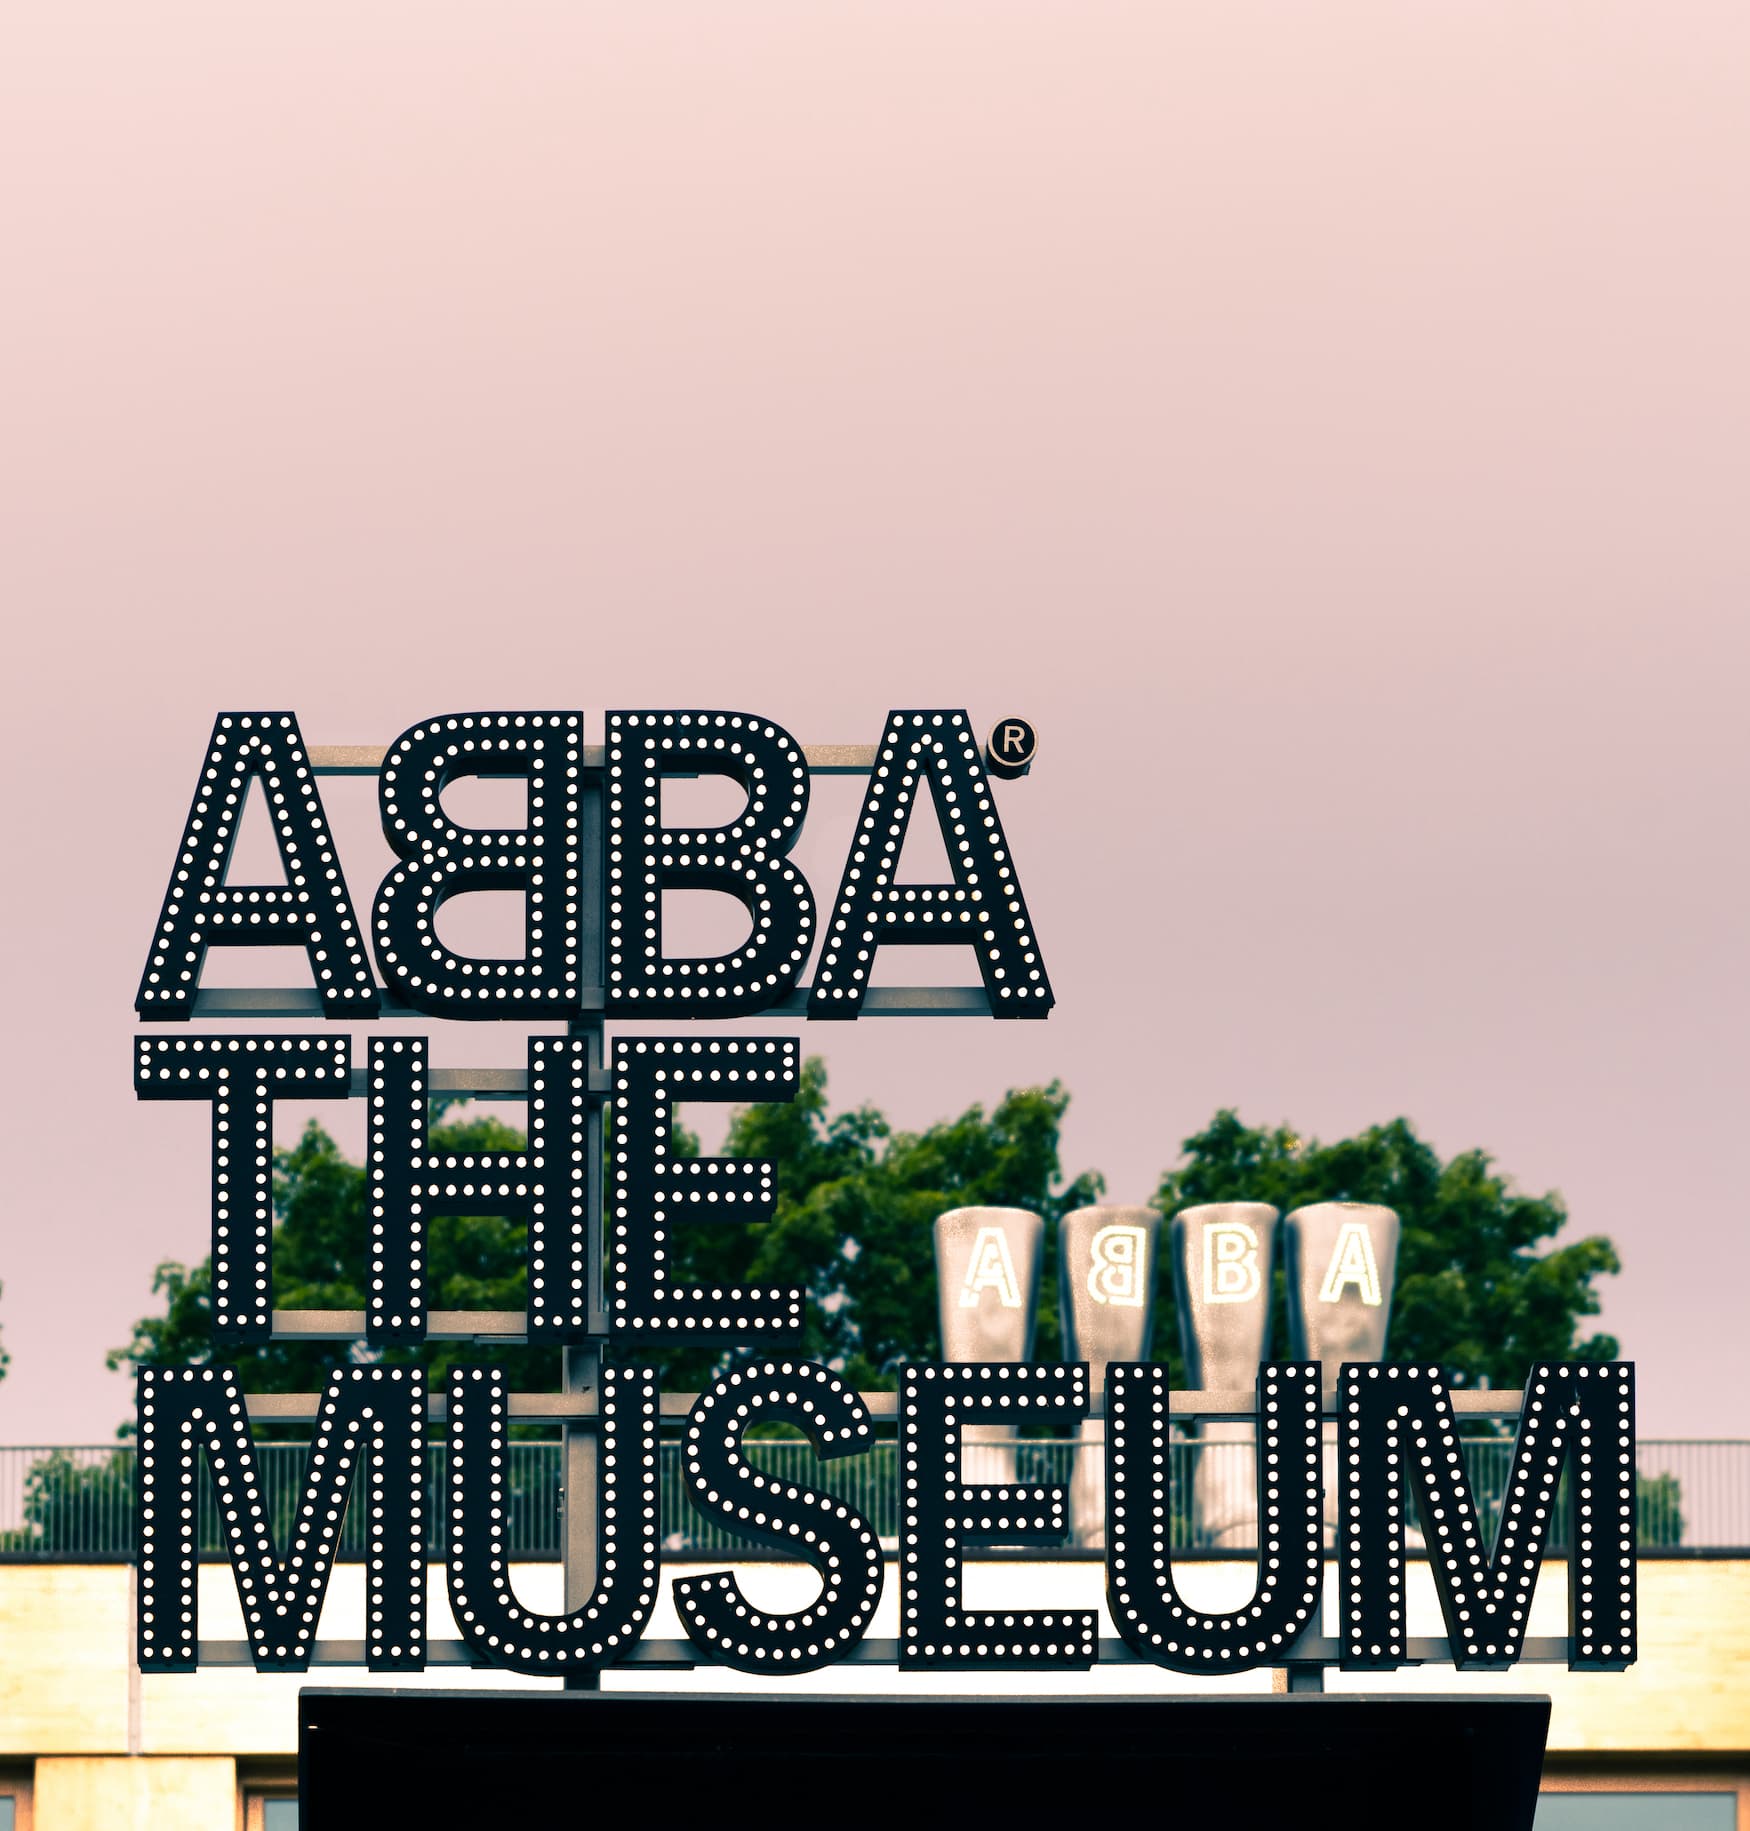 Abba Museum in Djurgården, Stockholm